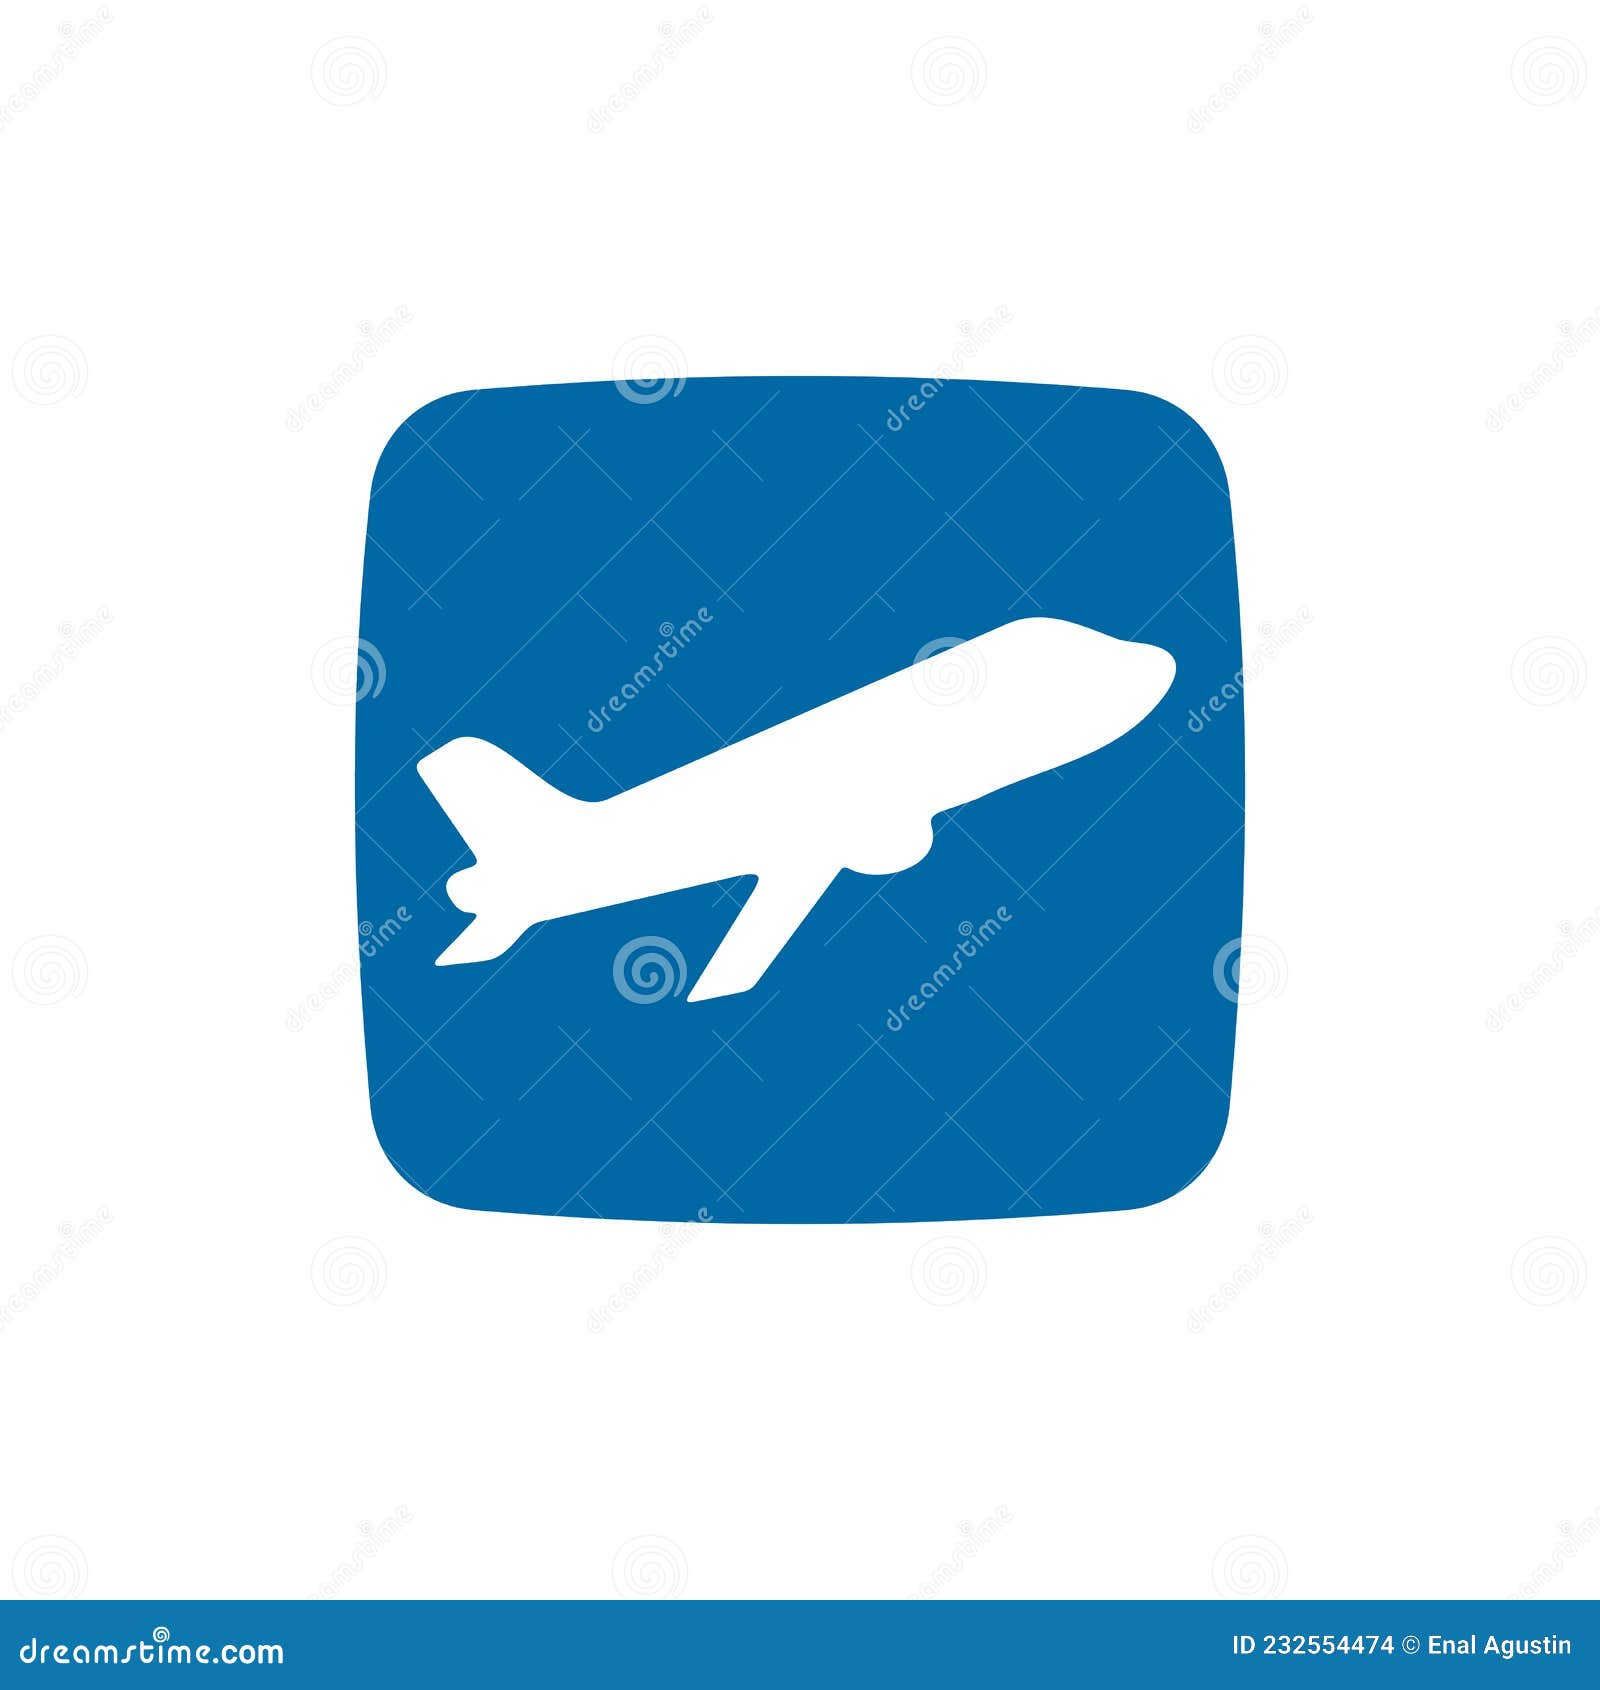 Online Travel Agency App Logo Design Stock Vector - Illustration of ...